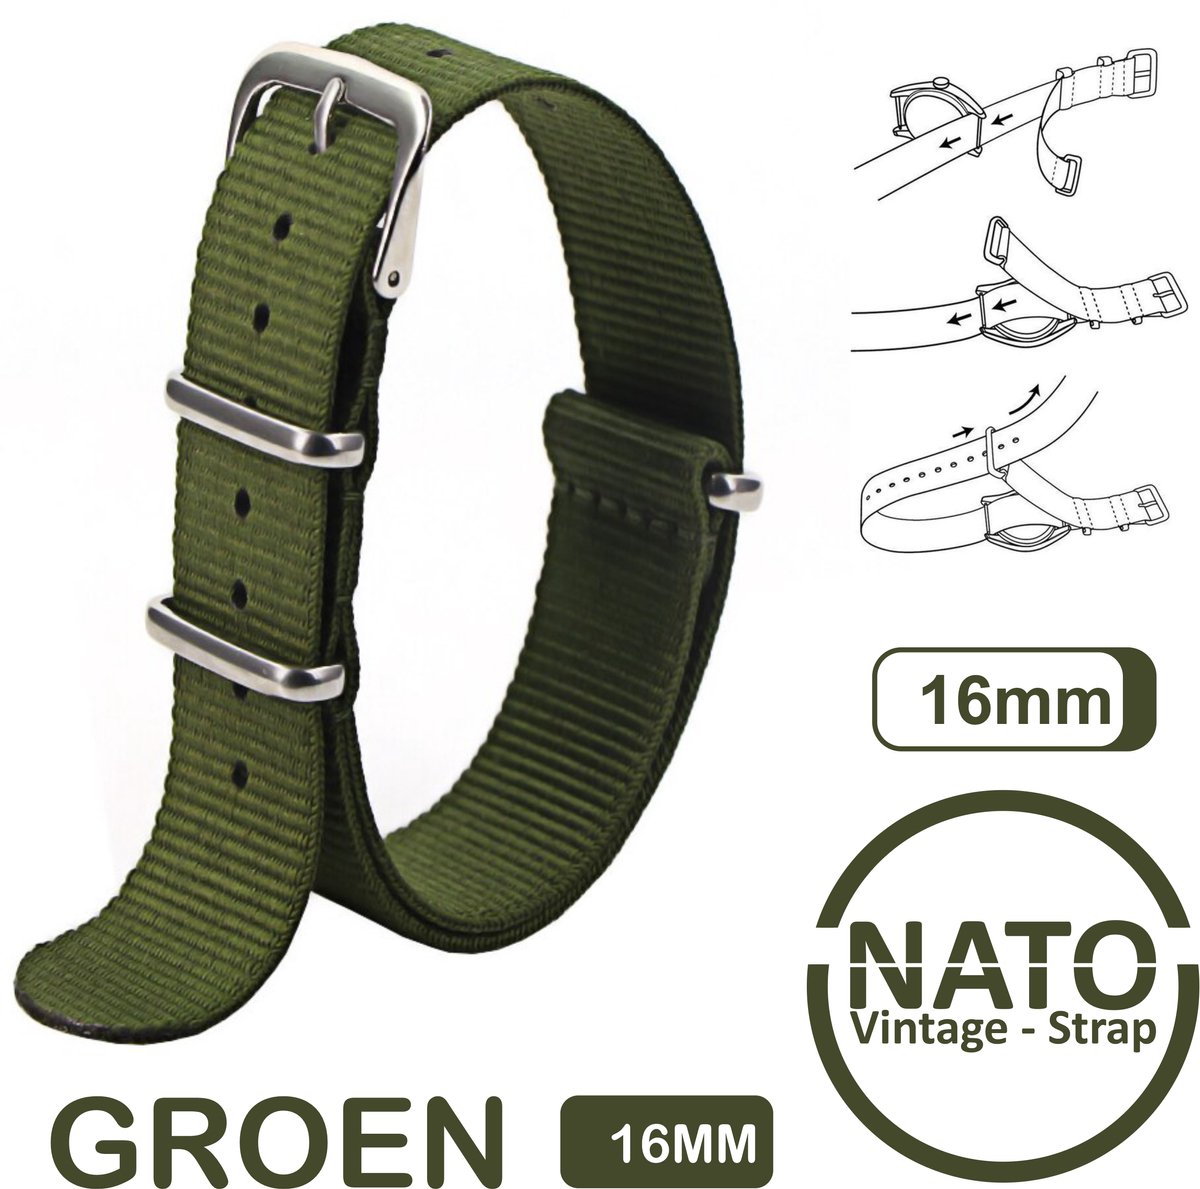 16mm Nato Strap Leger Groen - Vintage James Bond - Nato Strap collectie - Mannen - Vrouwen - Horlogebanden - Legergroen 16 mm bandbreedte voor oa. Seiko Rolex Omega Casio en Citizen